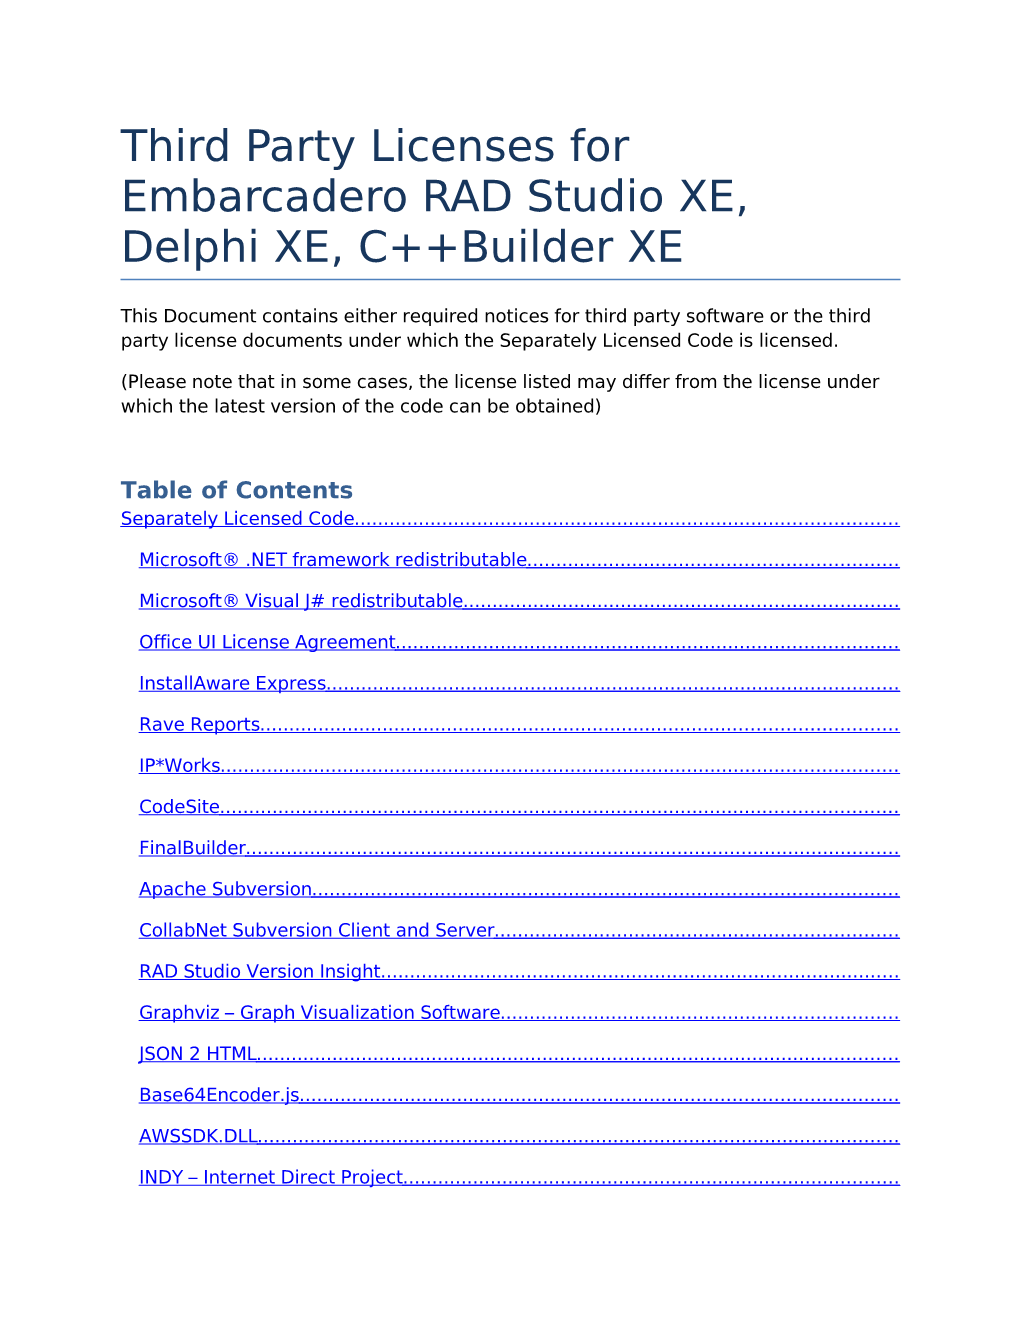 Third Party Licenses for Embarcadero RAD Studio XE, Delphi XE, C++Builder XE